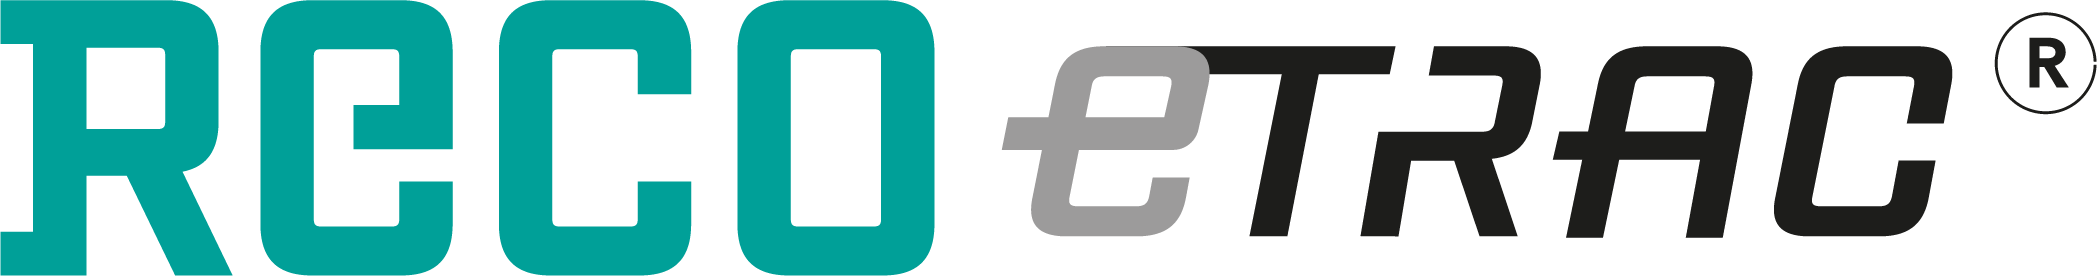 RECO eTrac - Logo - Forside